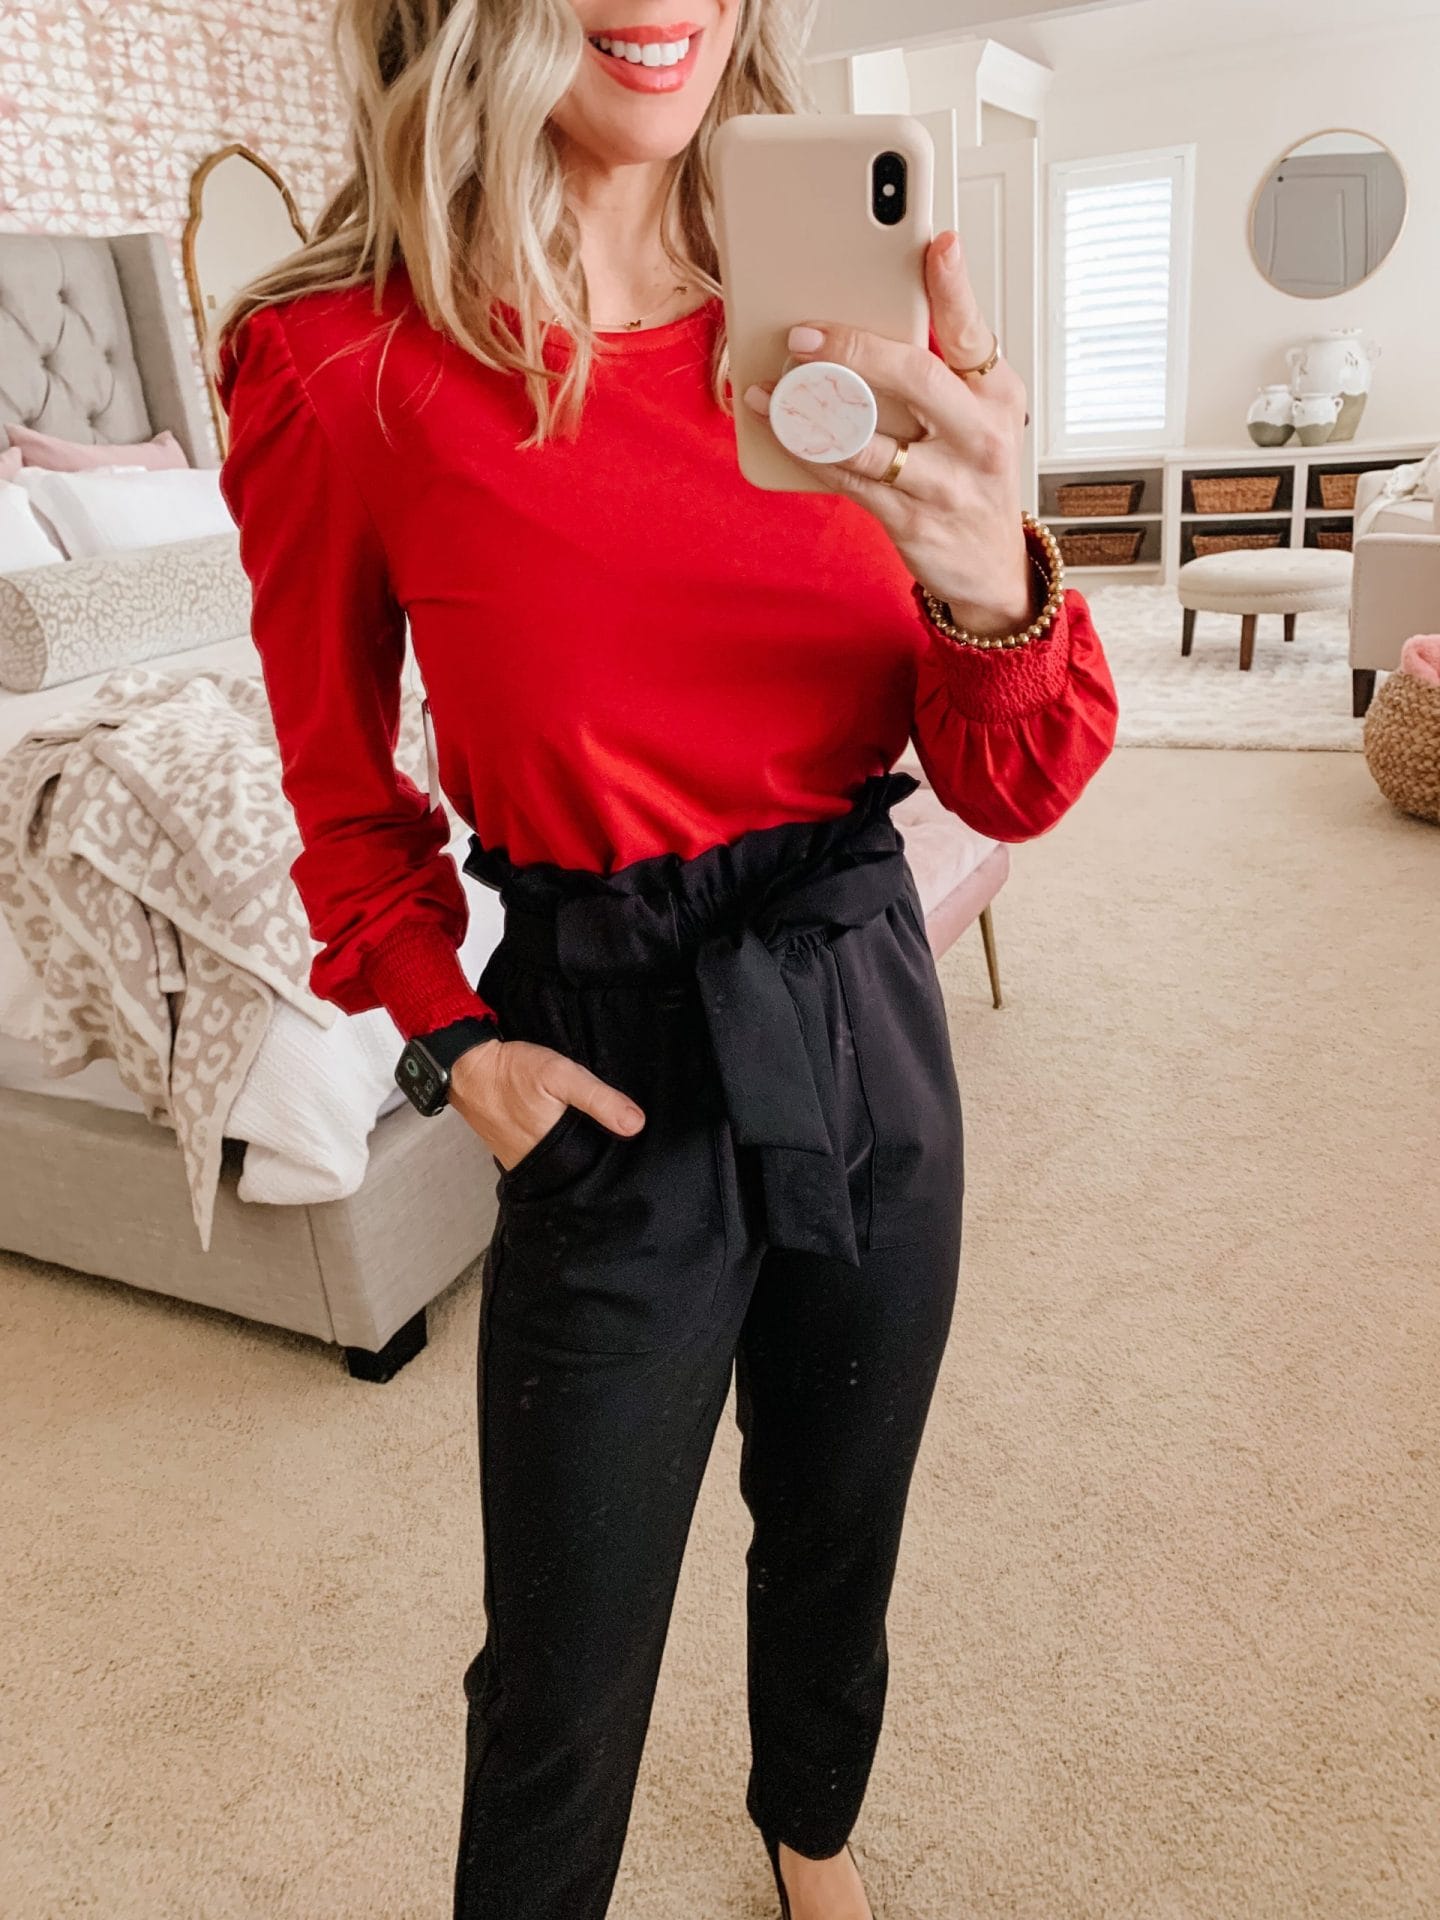 Amazon Fashion, Red Sweater, Pants, Heels 